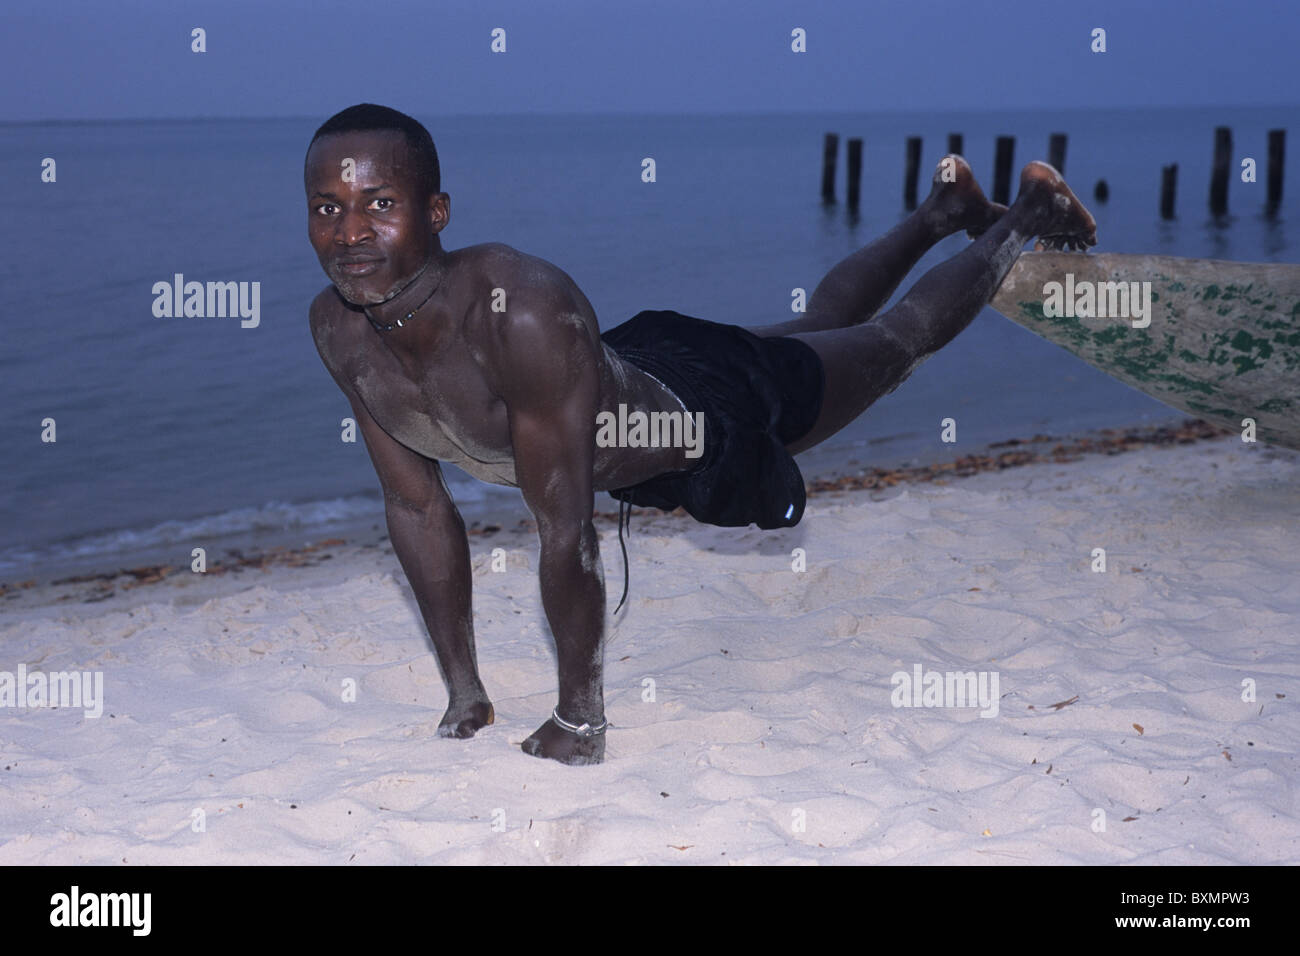 Fighter Training At The Beach At Evening Carabane Island Casamance Region Senegal Stock Photo Alamy